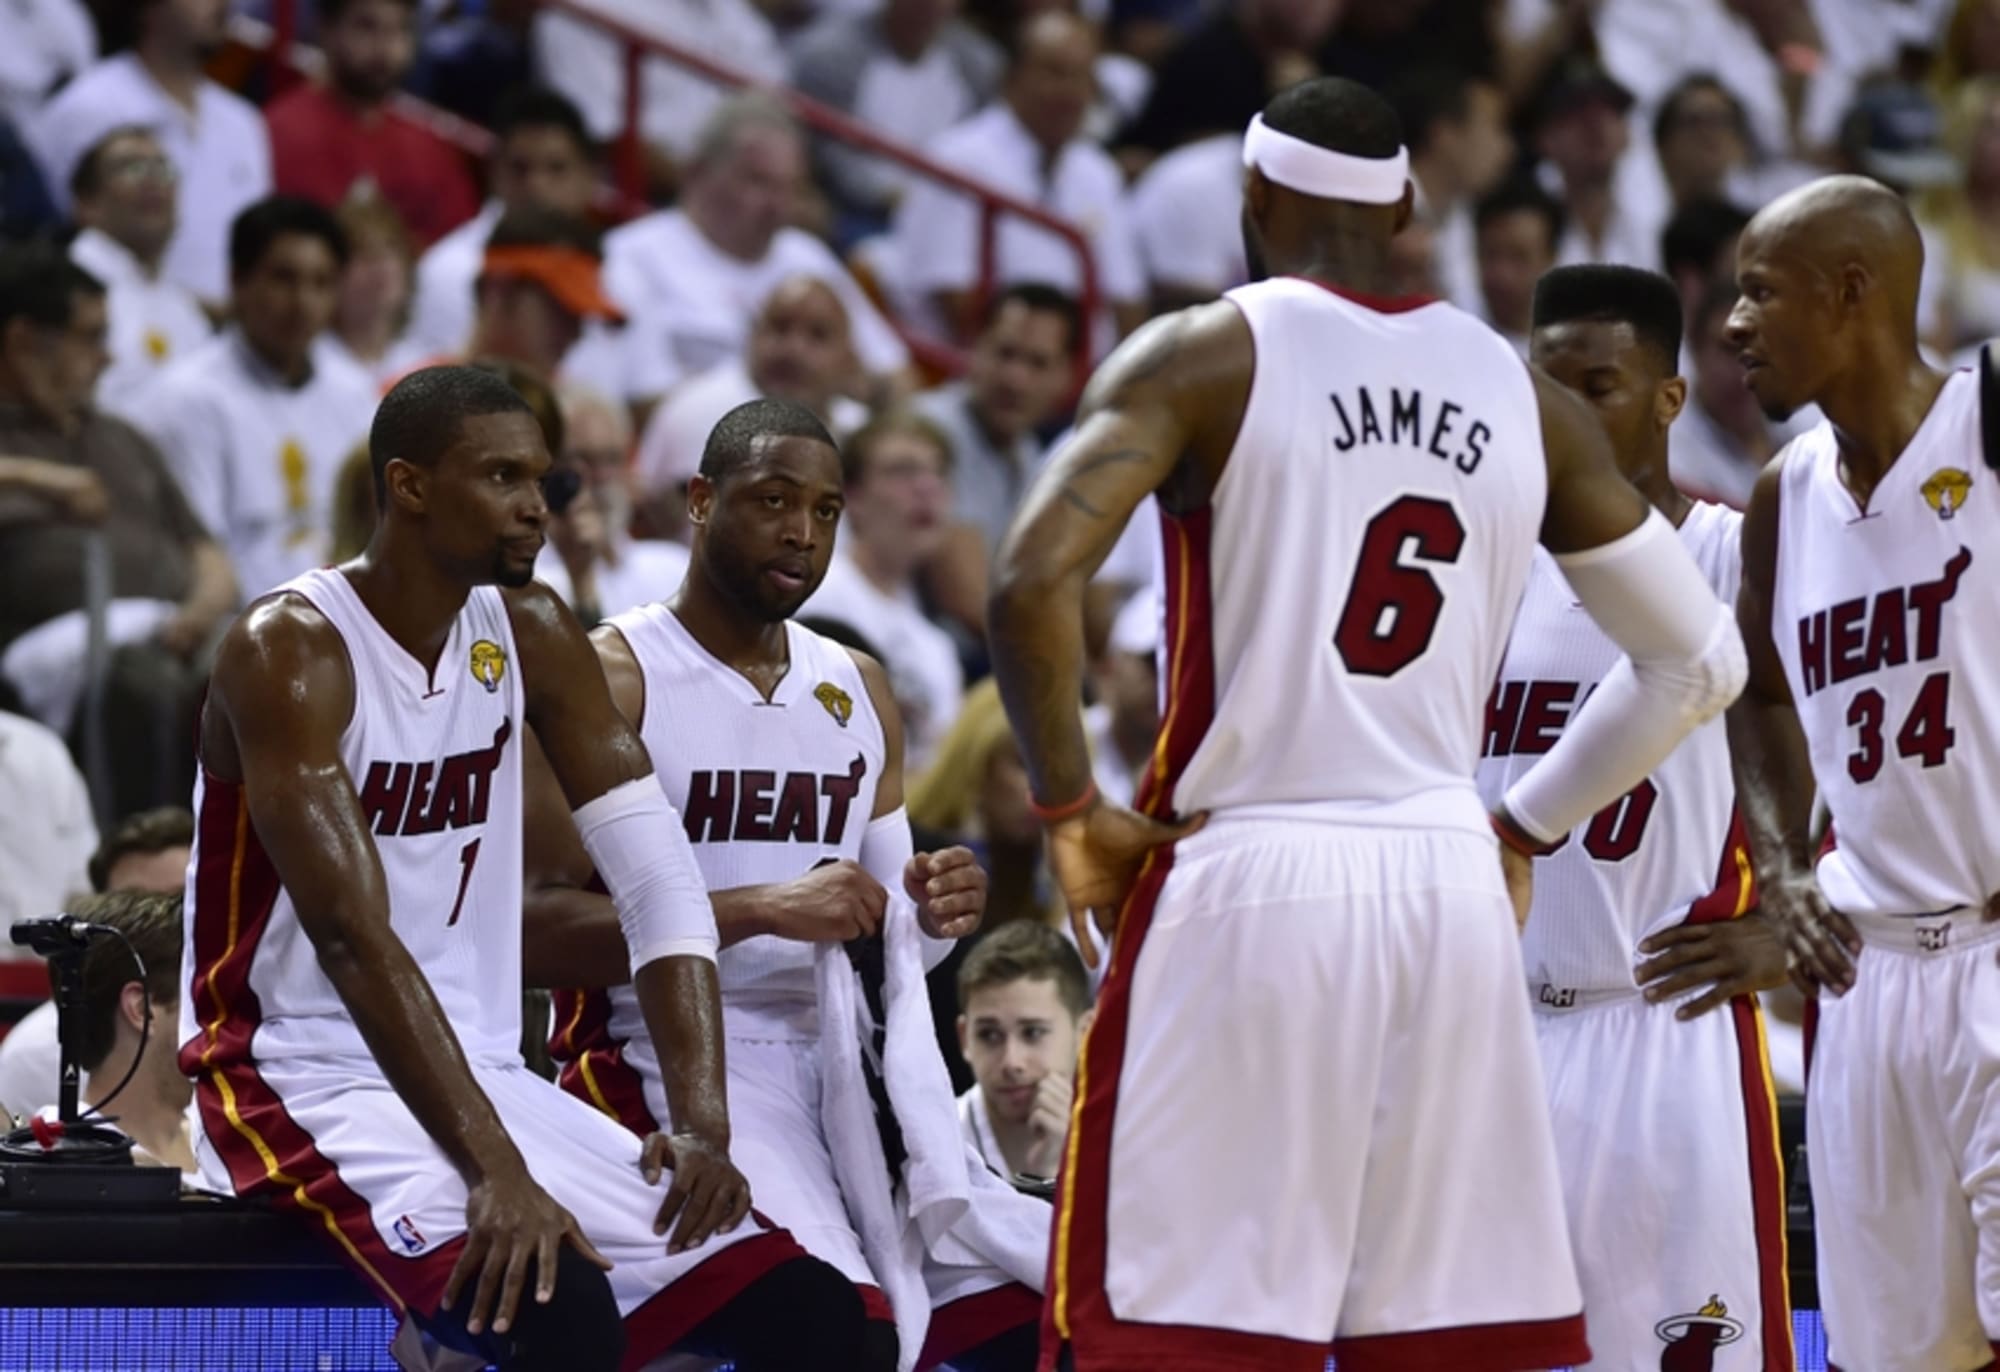 Miami Heat's Shane Battier adjusting to new role as undersized